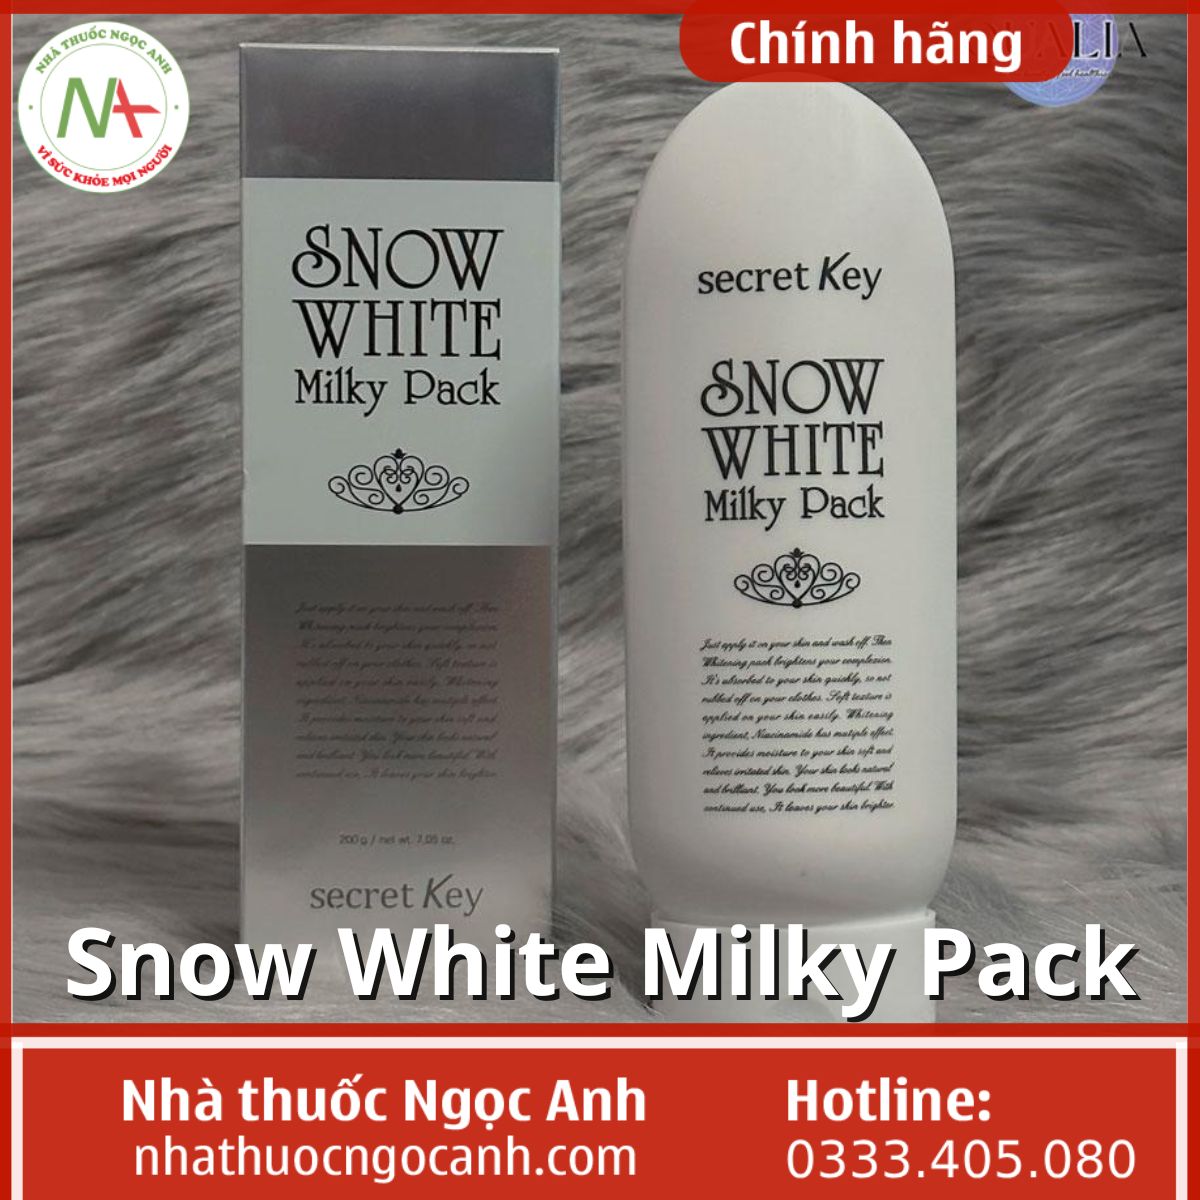 Snow White Milky Pack dưỡng trắng da